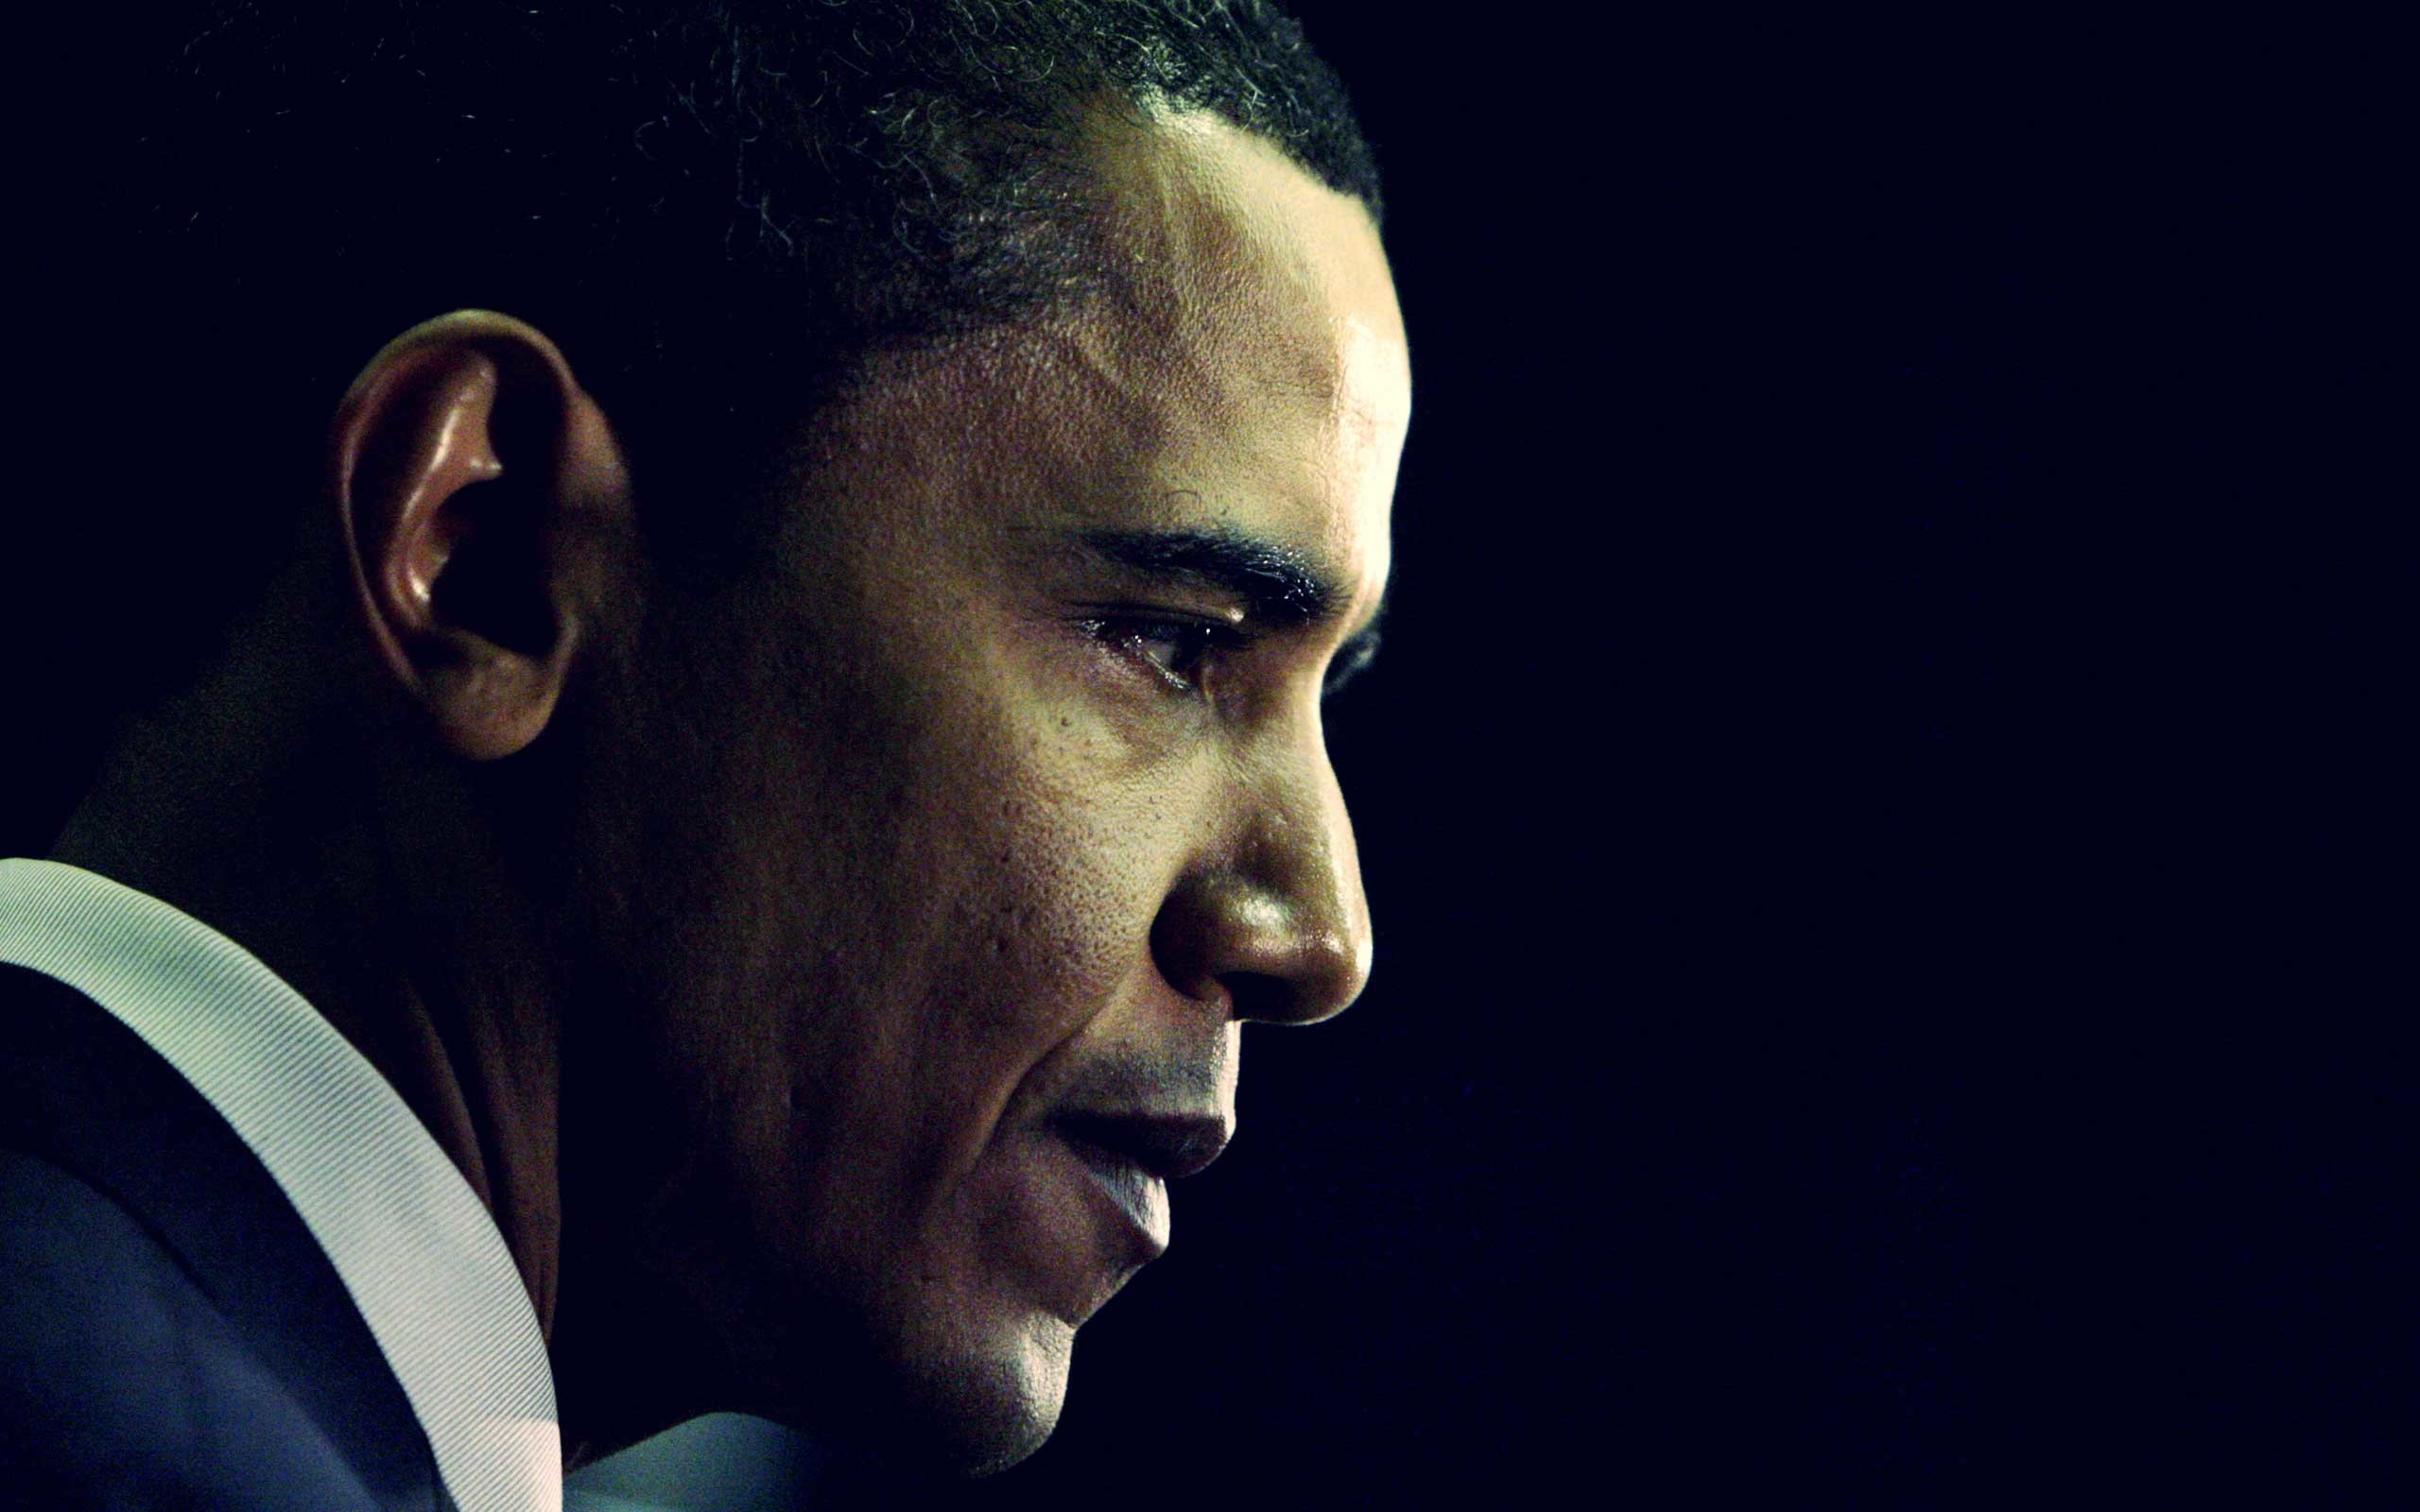 100+] Barack Obama Wallpapers | Wallpapers.com